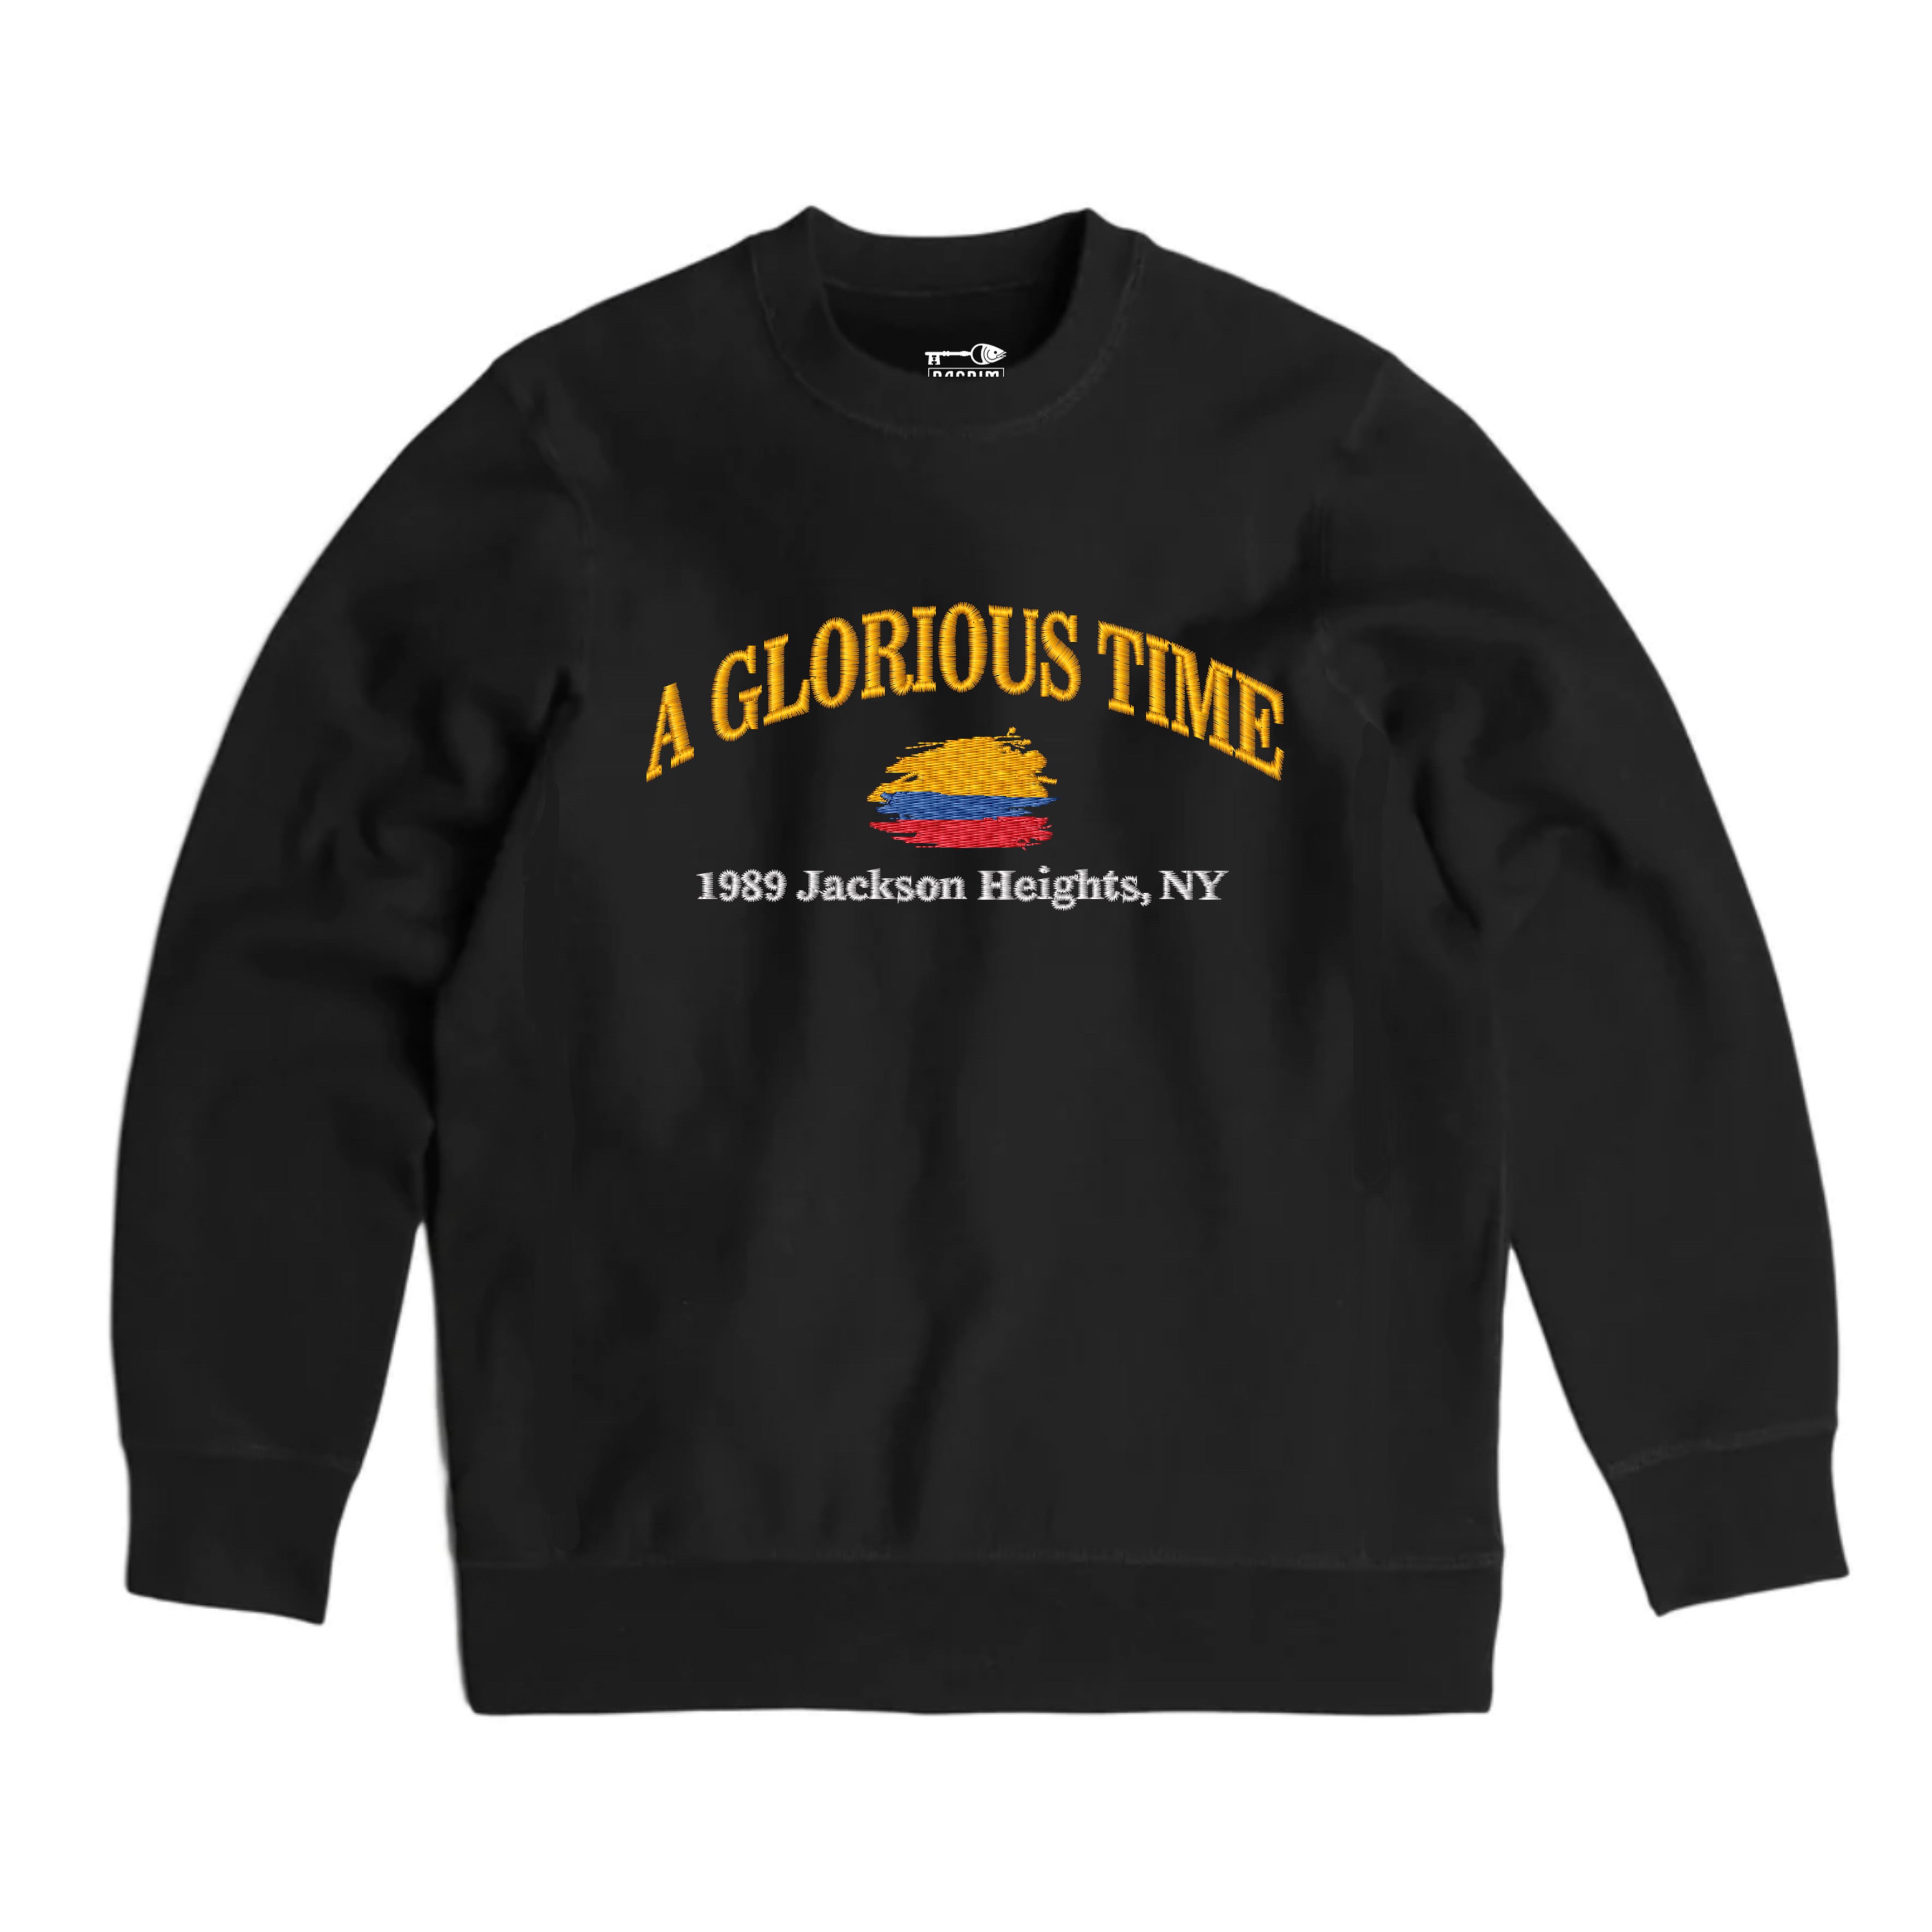 A Glorious Time Crewneck Sweatshirt